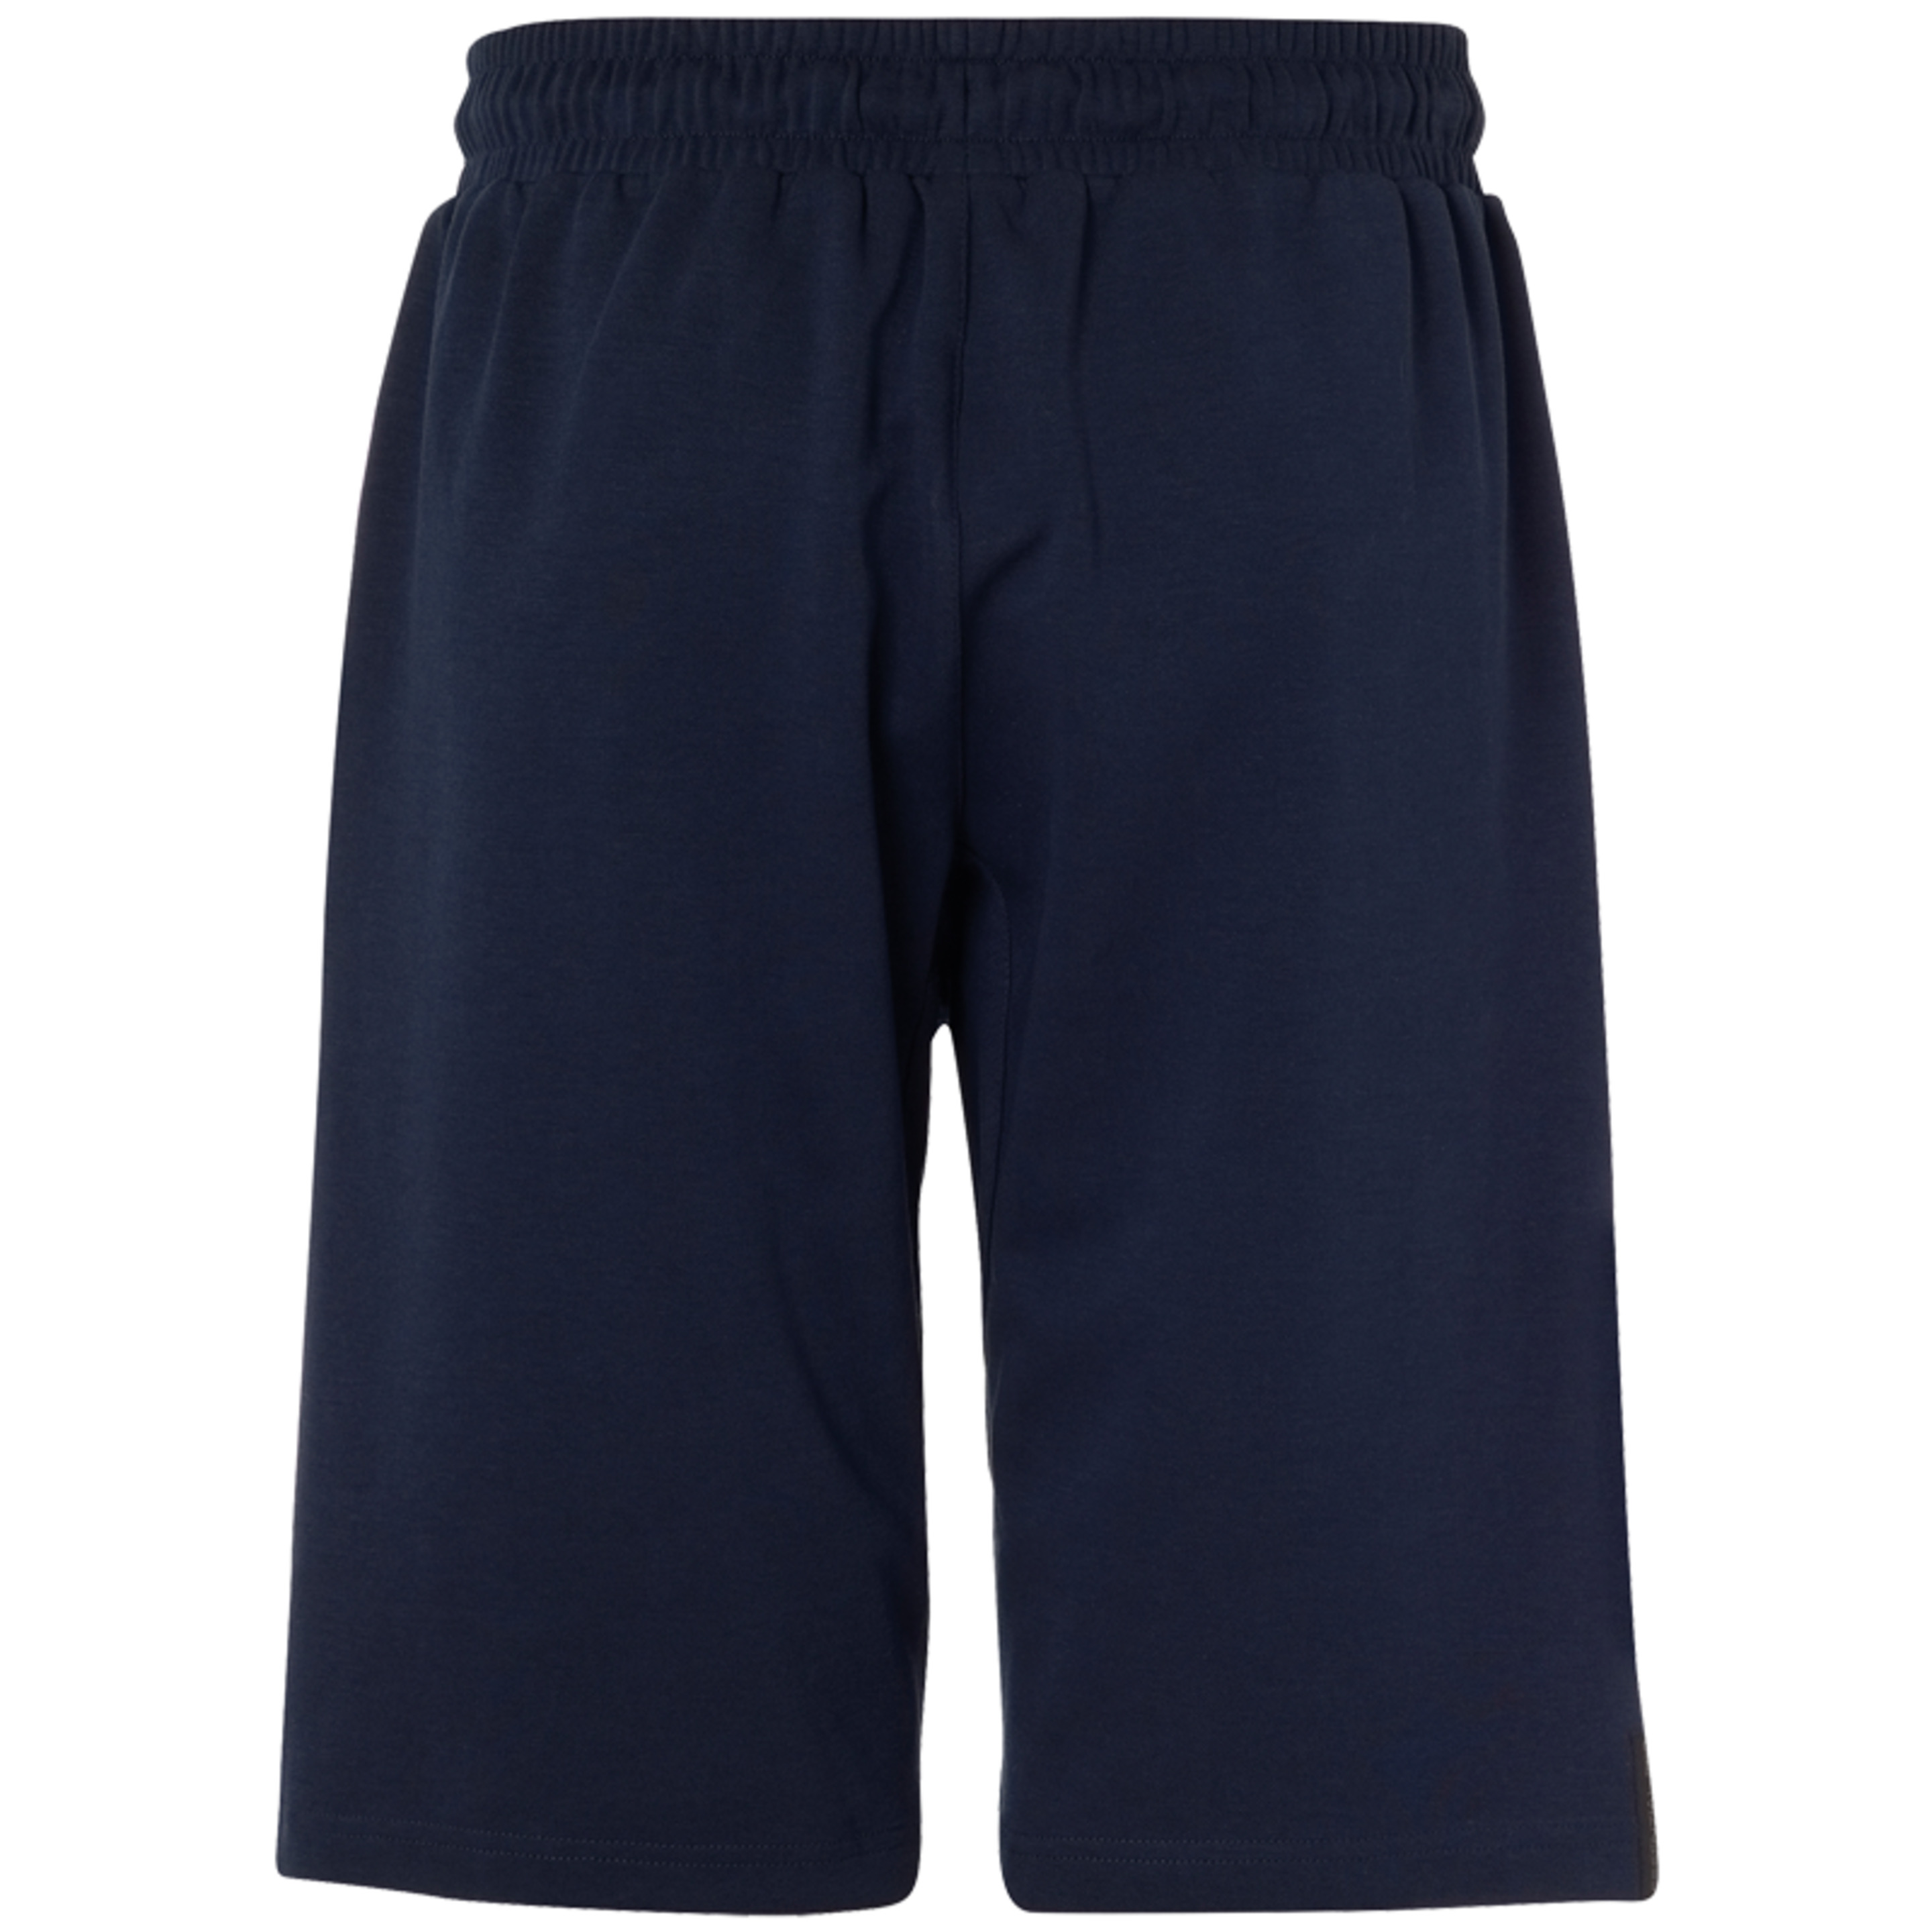 Essential Pro Shorts Blue Uhlsport